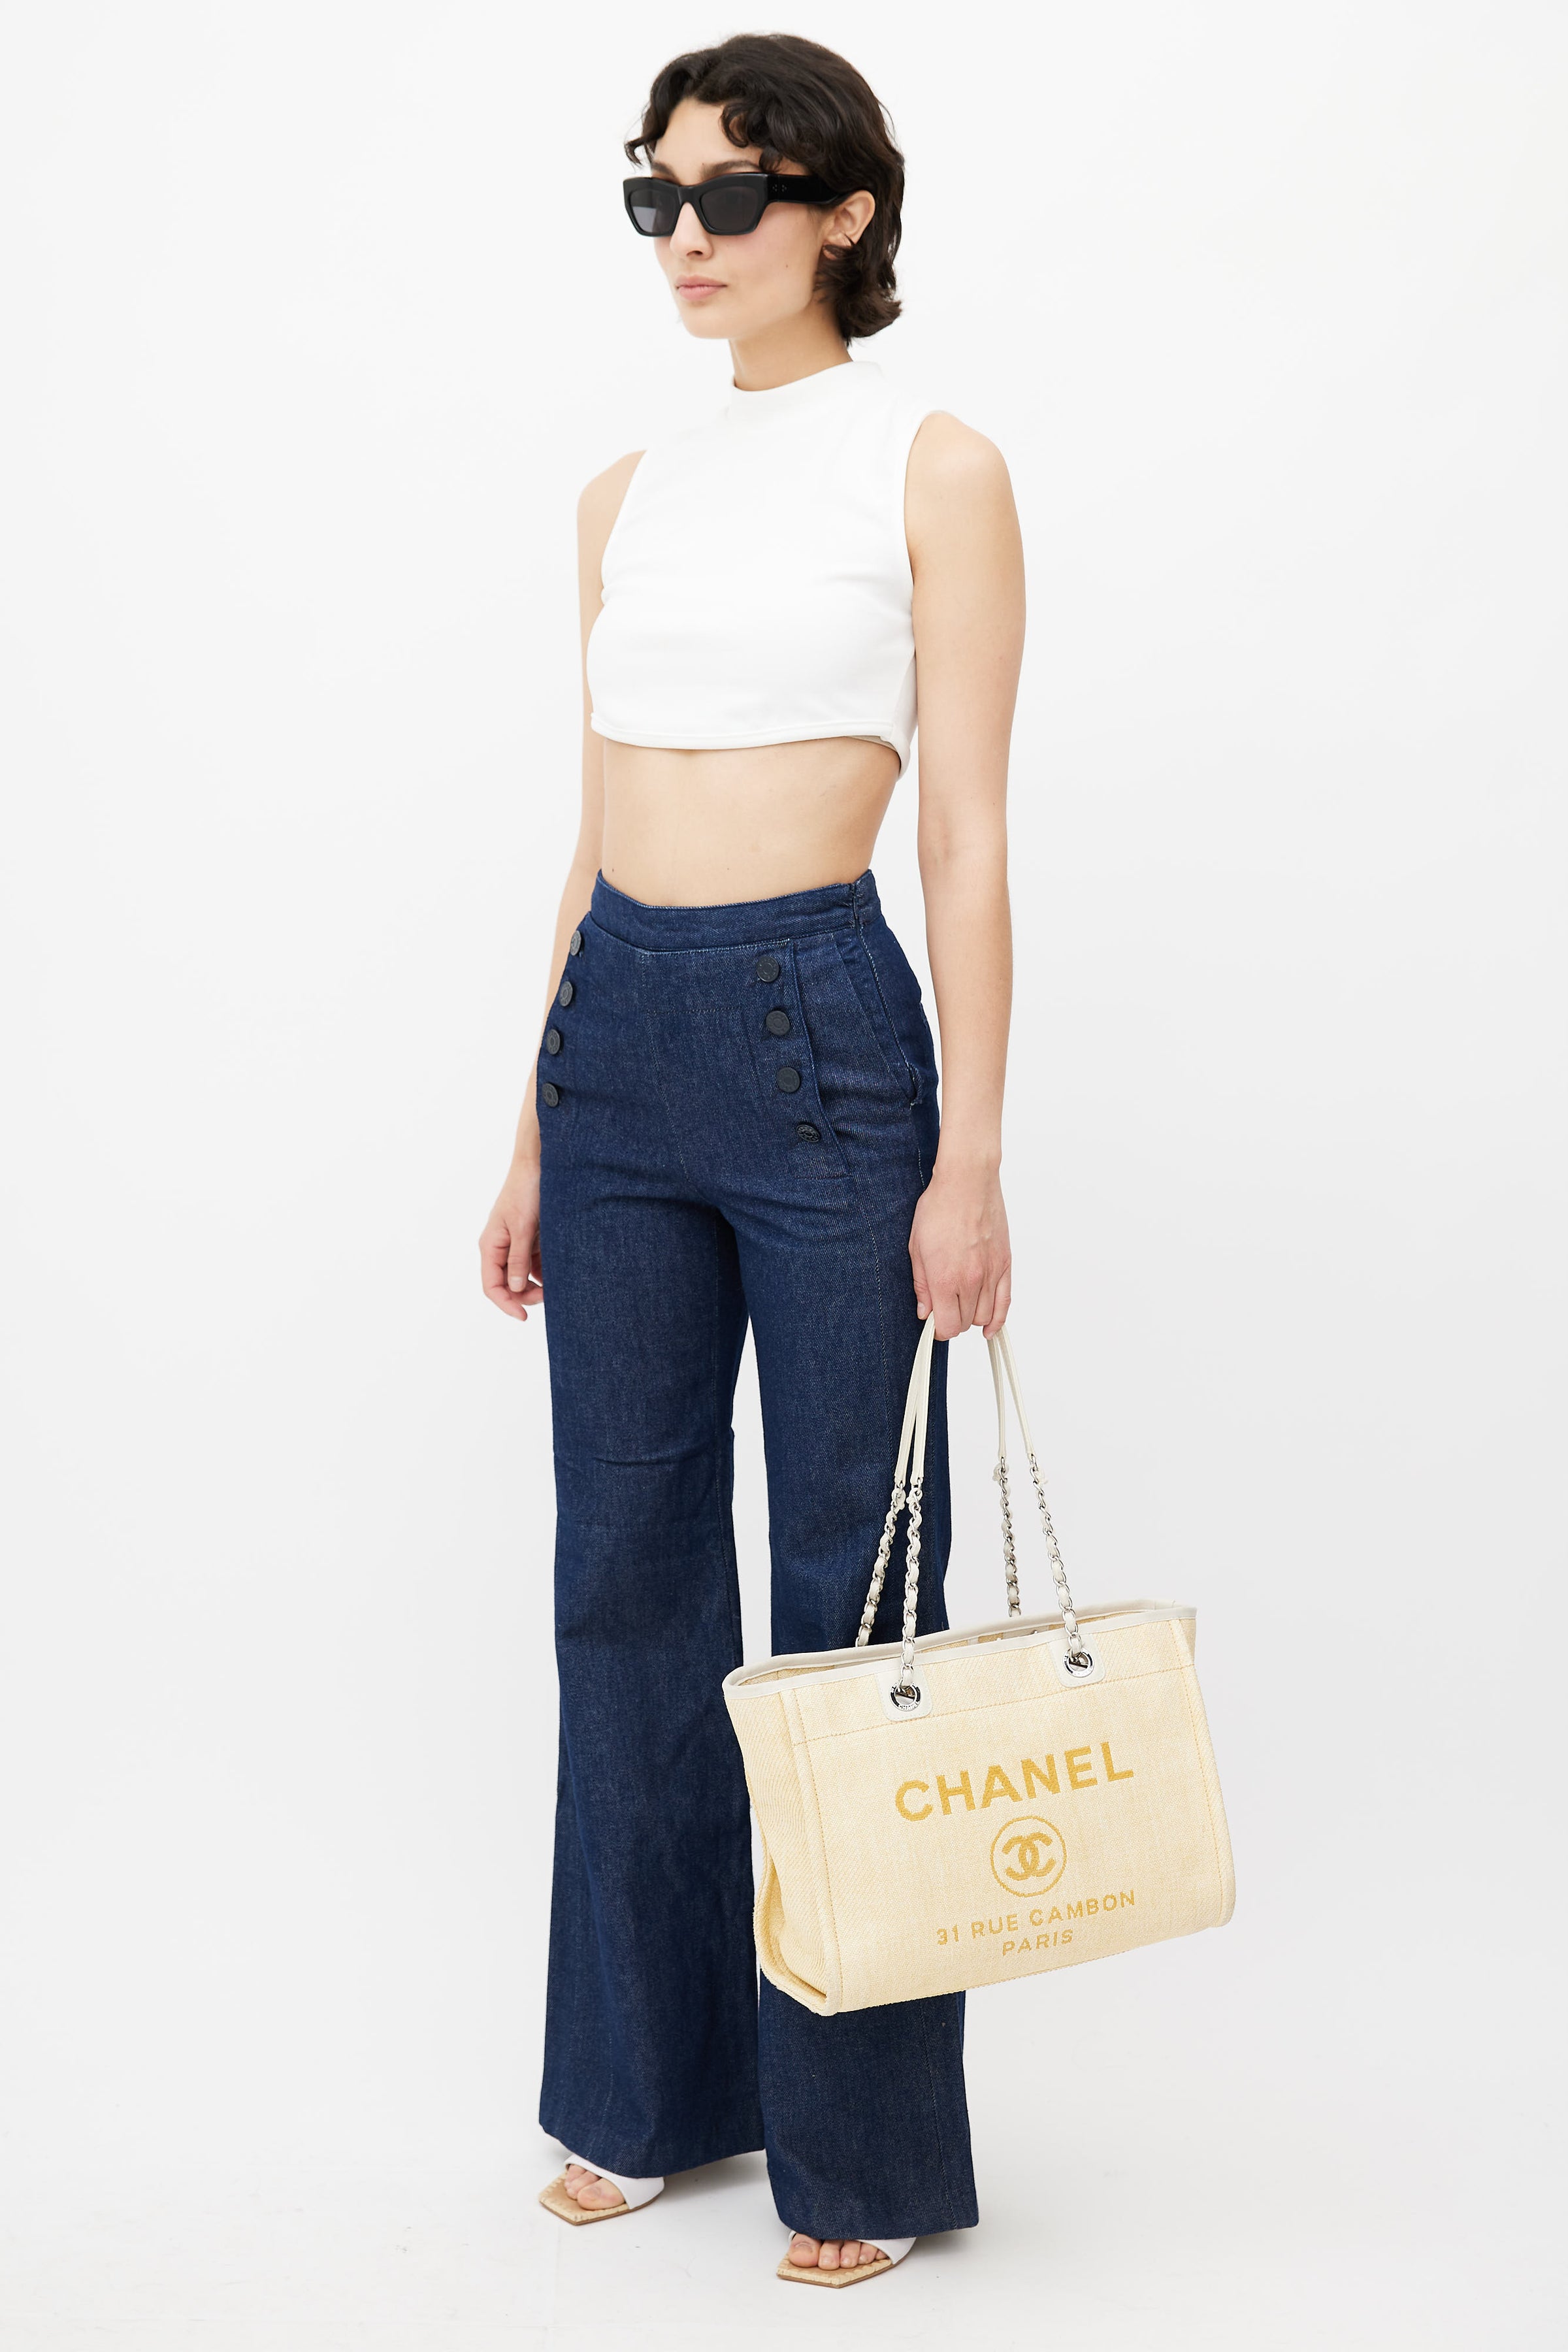 Chanel Deauville Tote Small